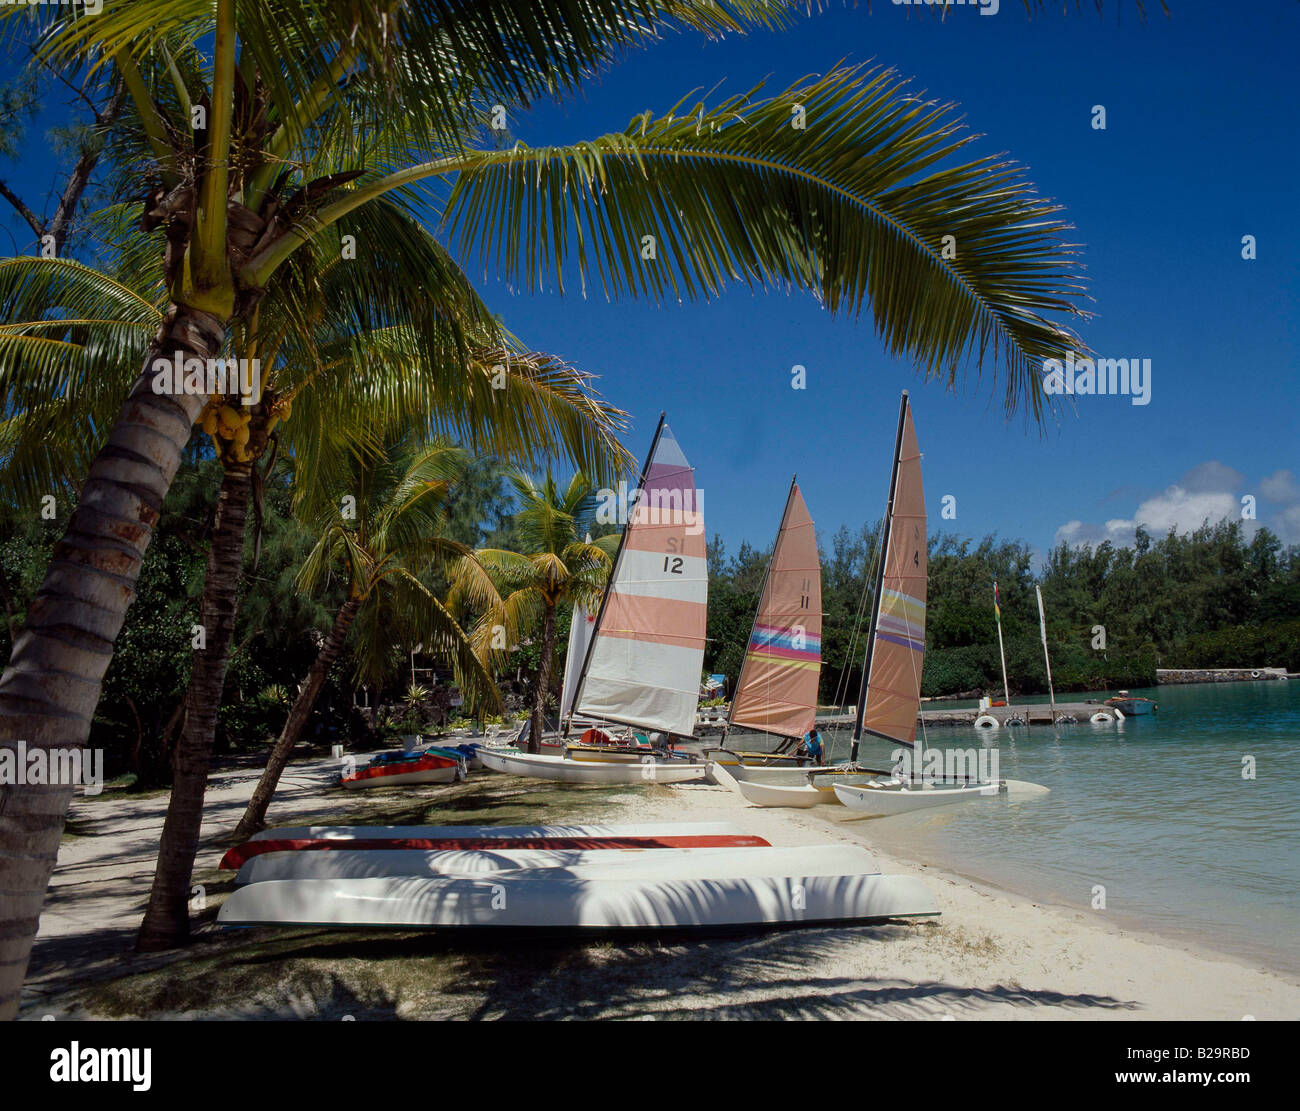 Ile Aux Cerfs Mauritius Ref WP JEDMAR 203 COMPULSORY CREDIT World Pictures Photoshot Stock Photo